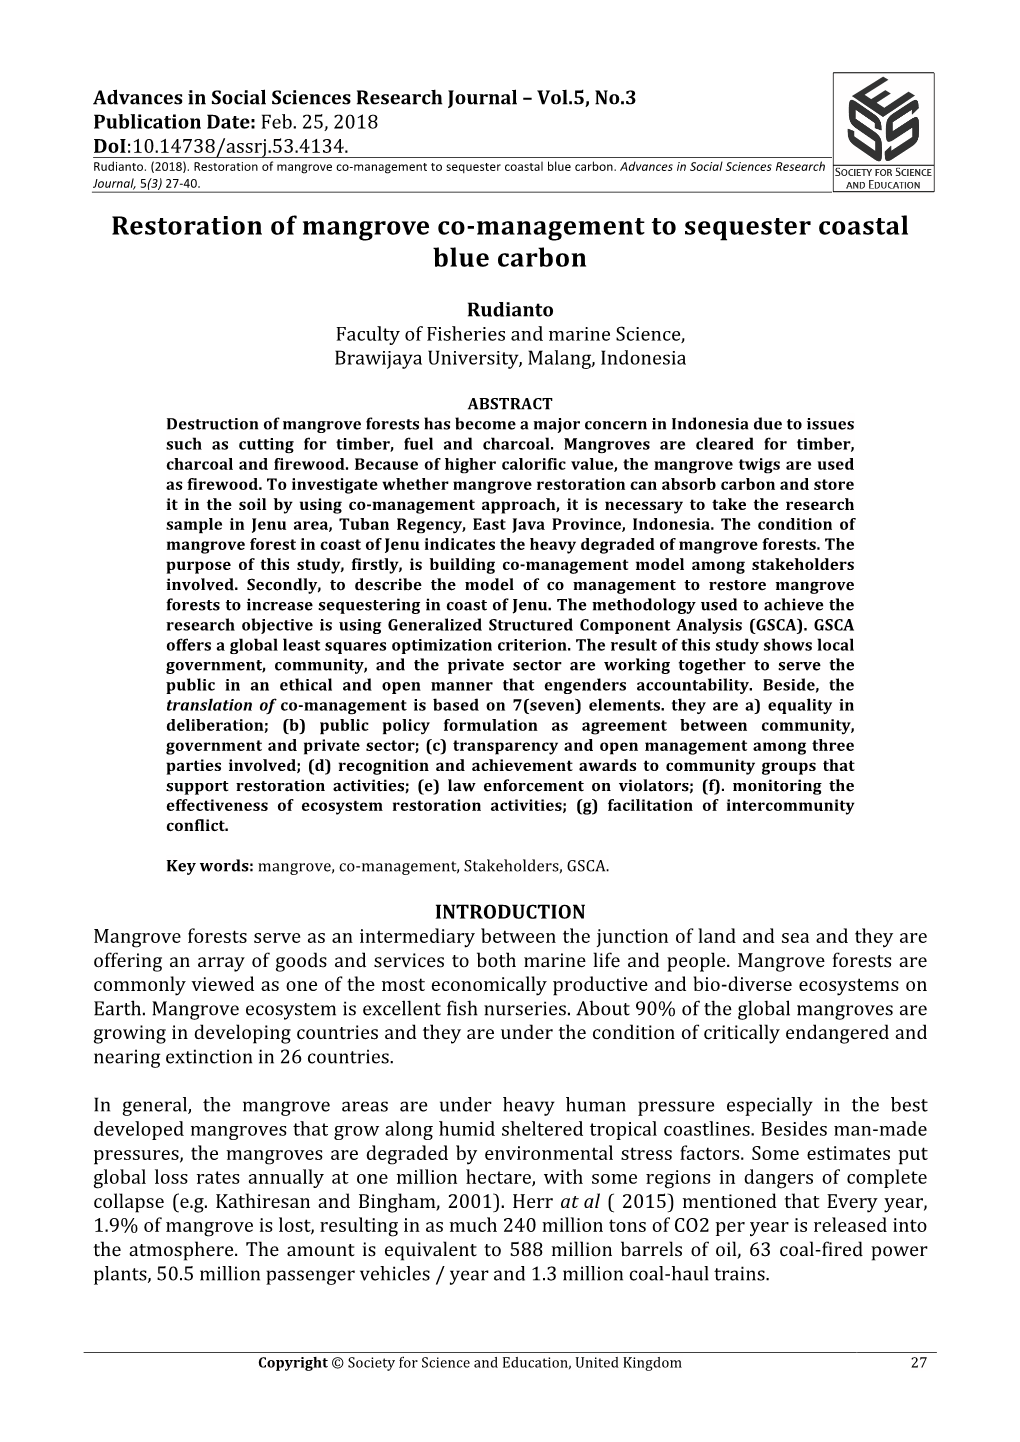 Restoration of Mangrove Co-Management to Sequester Coastal Blue Carbon